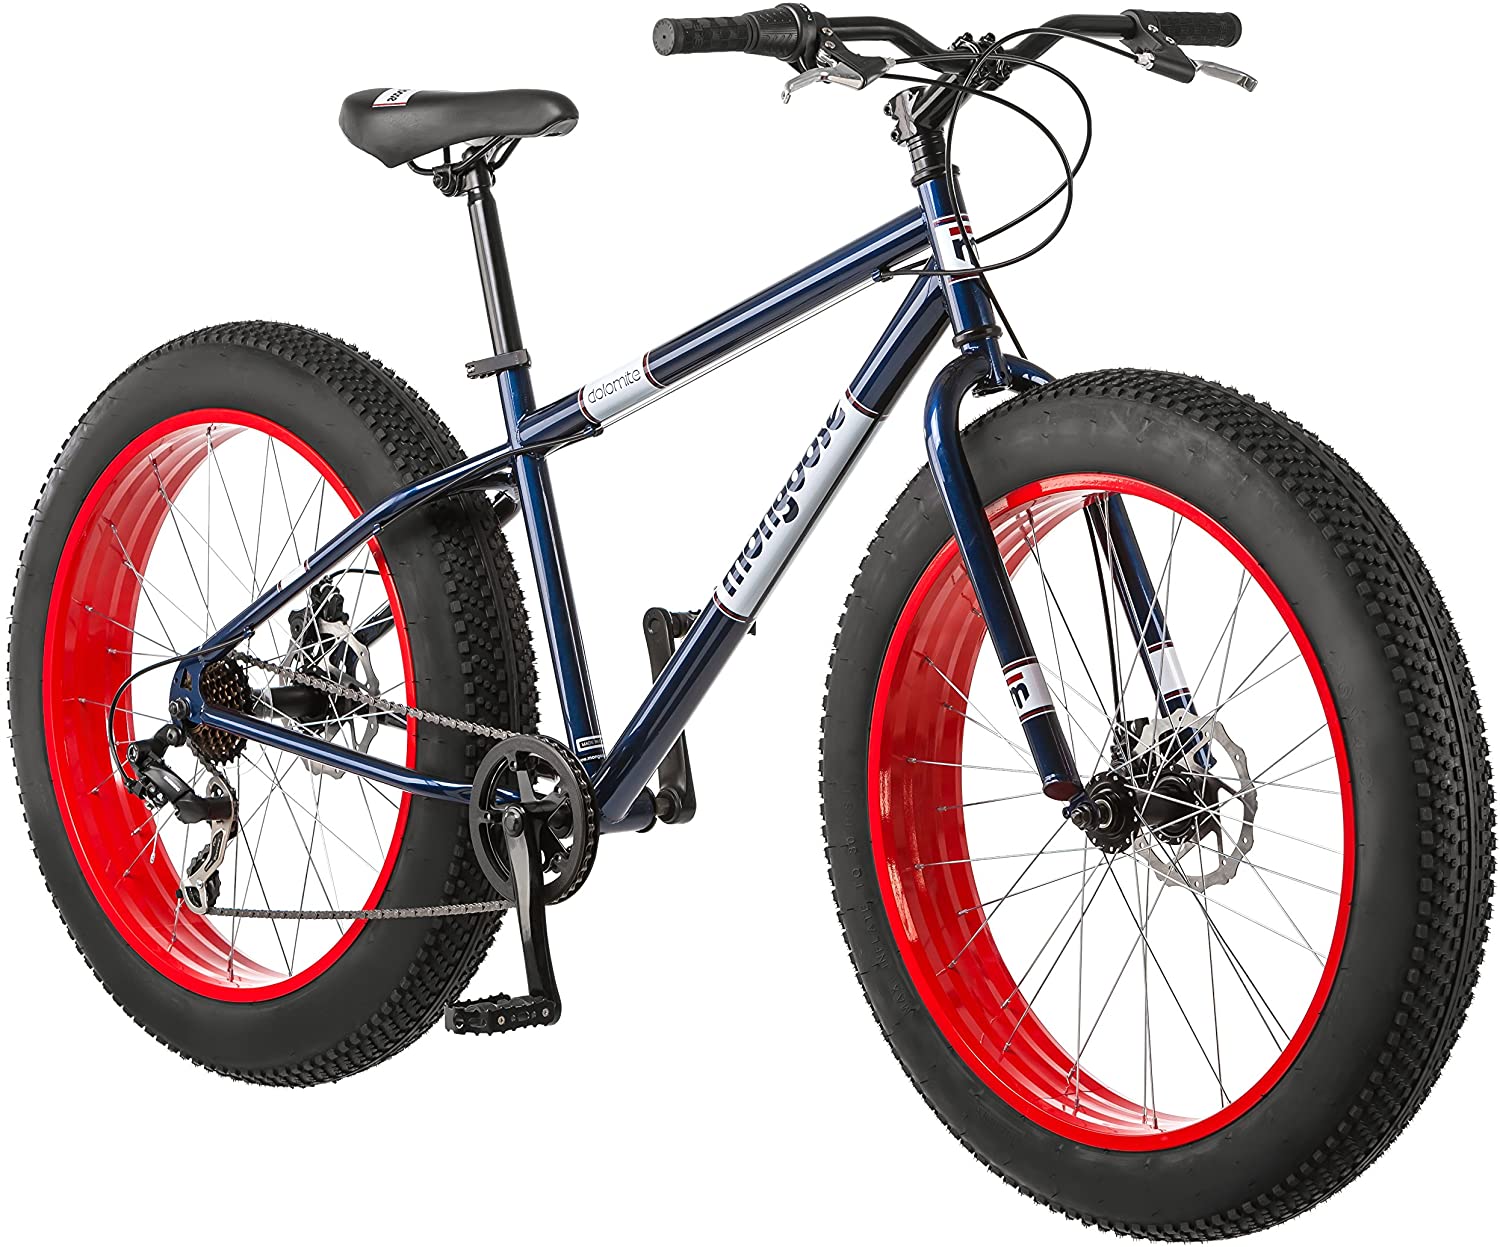 26" Mongoose Men's Dolomite Fat Tire Mountain Bike (Navy) $280 + Free Shipping